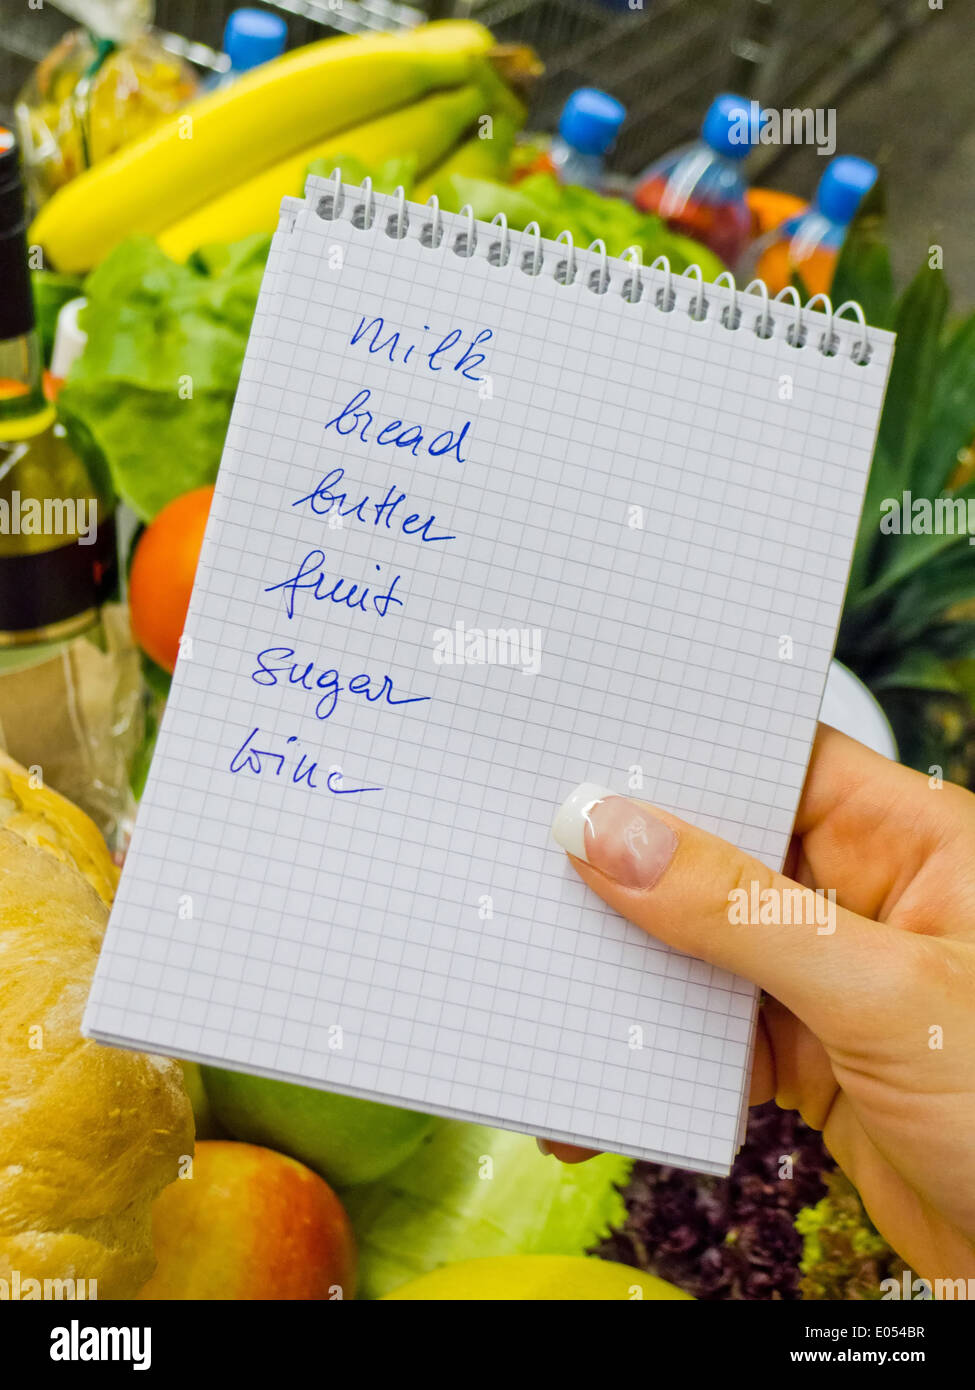 Una donna può contenere un elenco di acquisti in un supermercato in mano. Lingua inglese., Eine Frau hält einen Einkaufszettel in einem supe Foto Stock